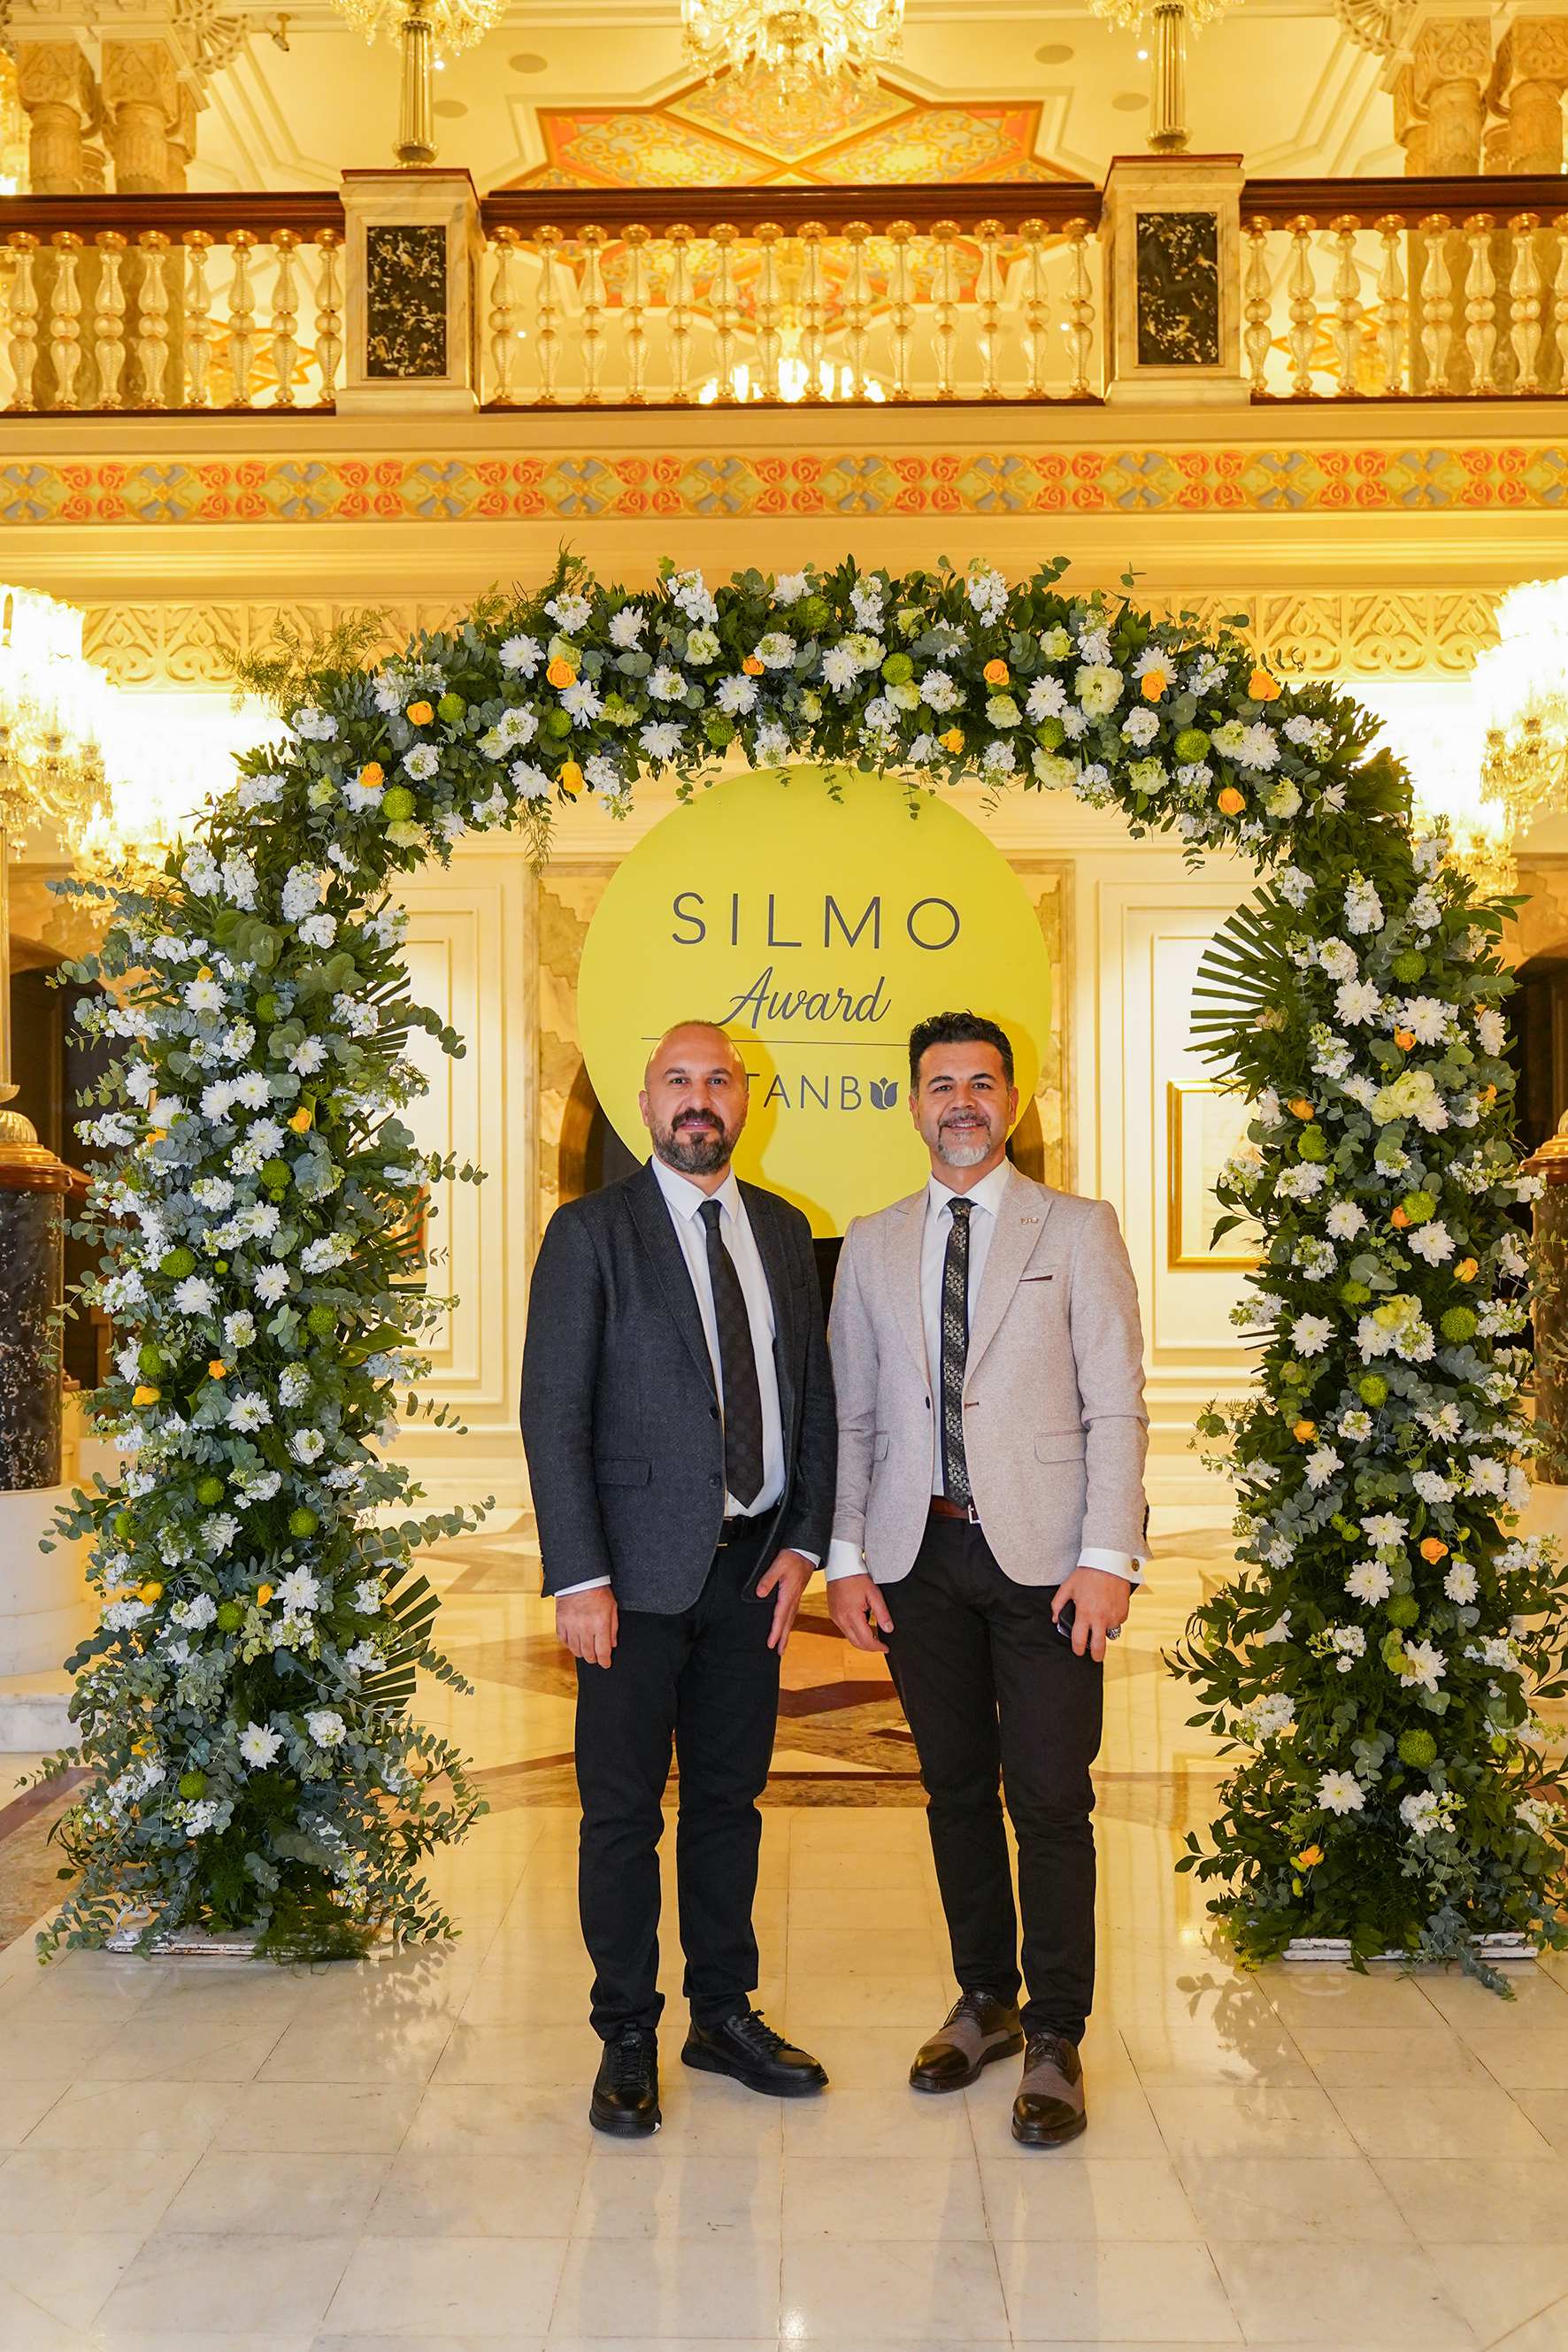 Silmo Award İstanbul